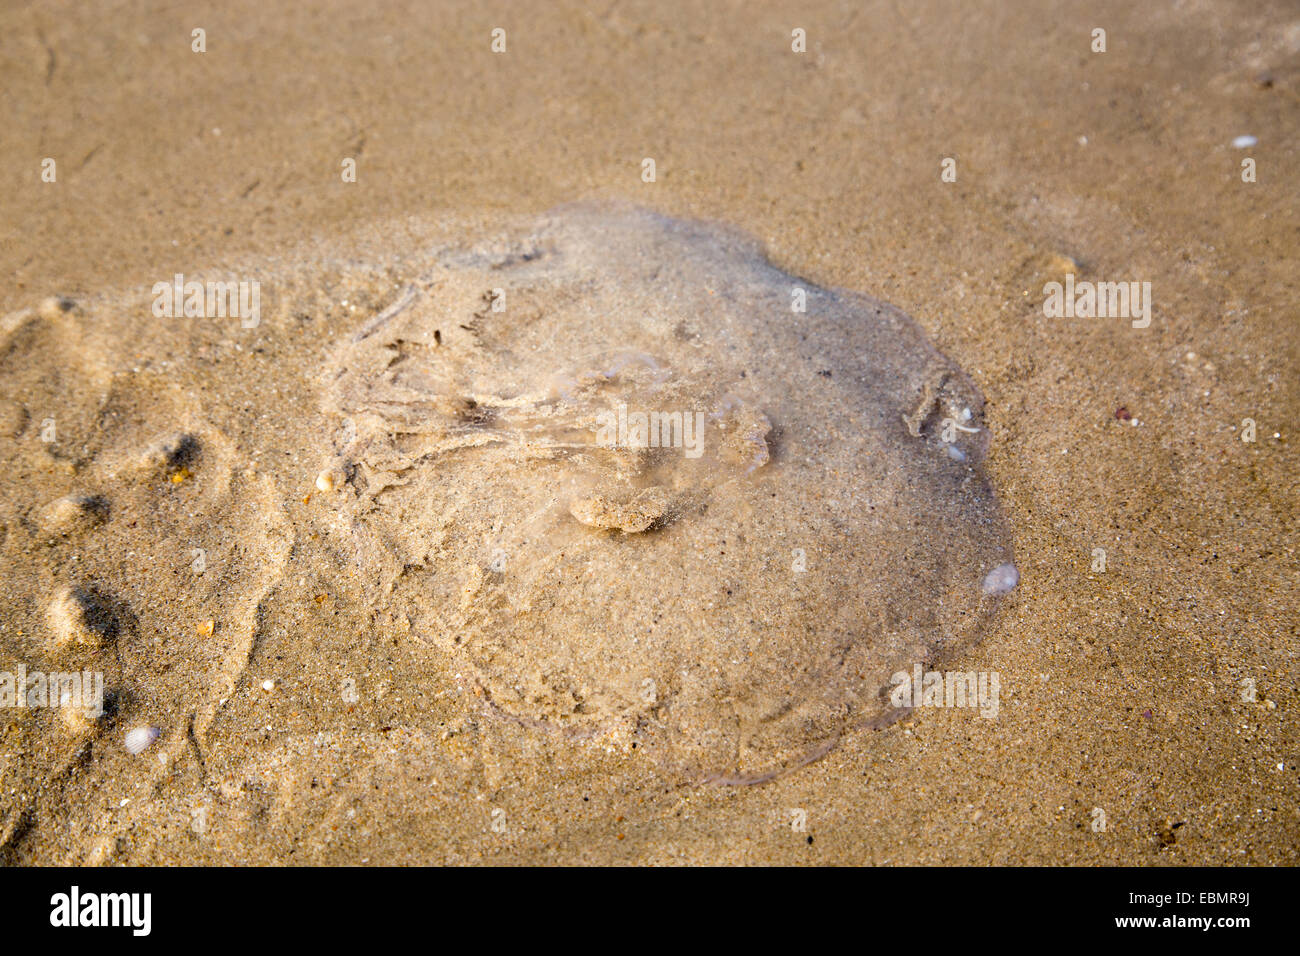 A Stranded jellyfish on sand beach Stock Photo